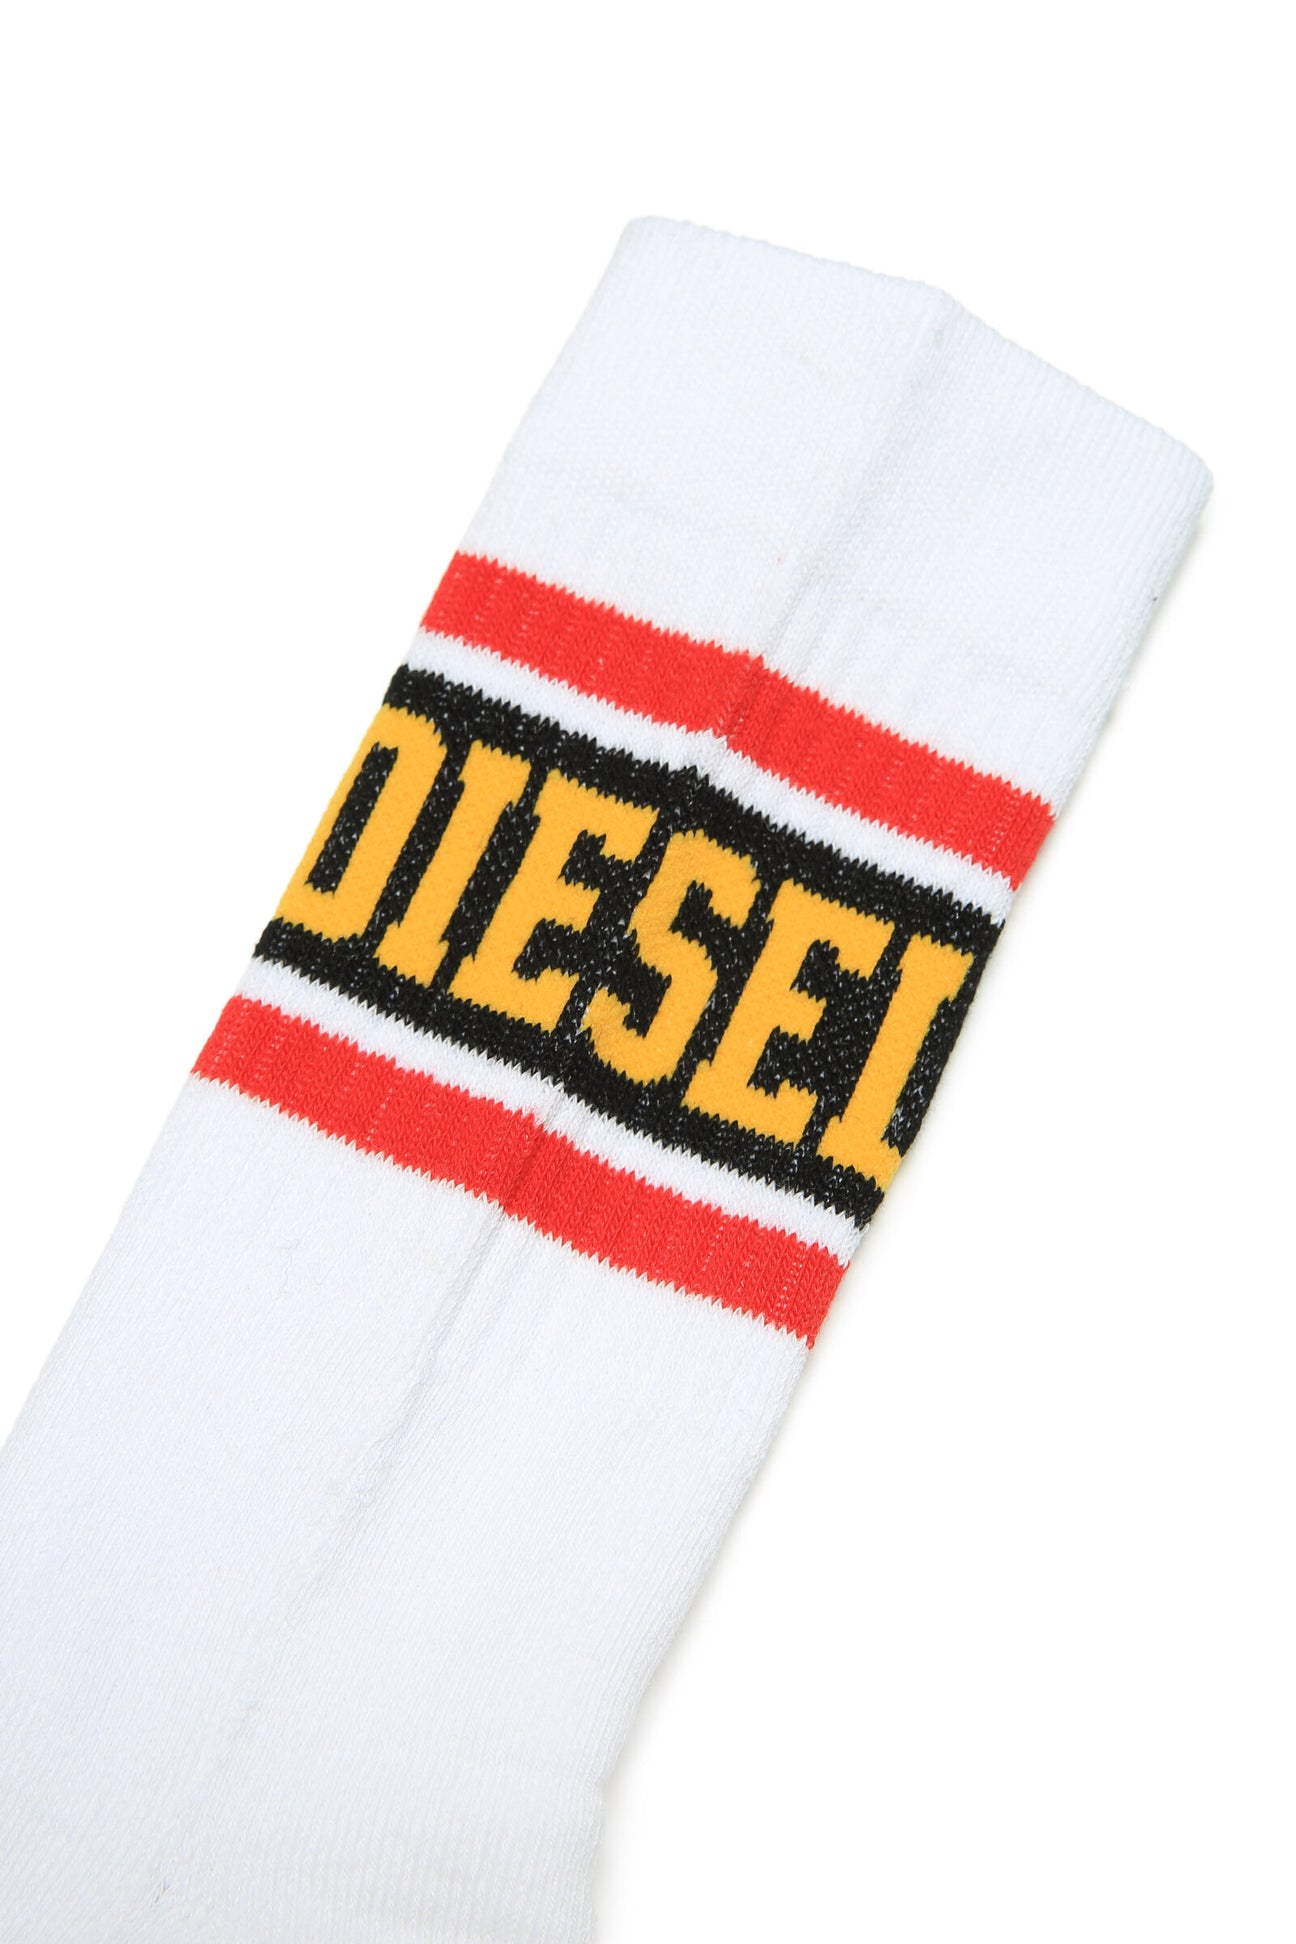 White socks with yellow and black logo White socks with yellow and black logo